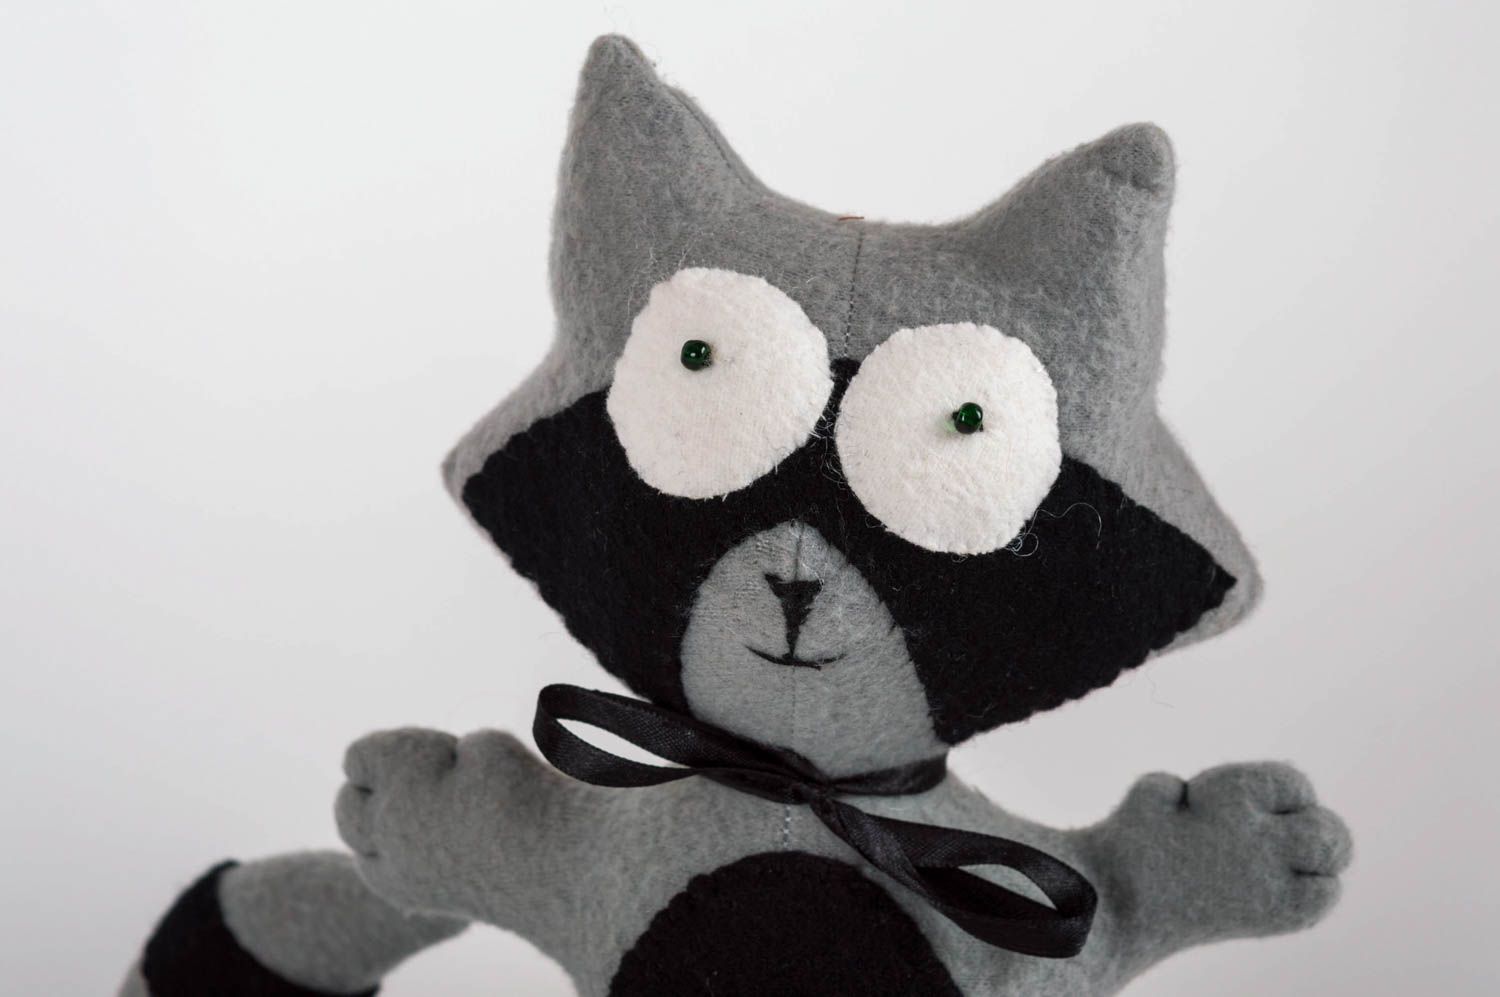 Handmade fabric soft toy stylish raccoon interior design and kids gift ideas photo 4